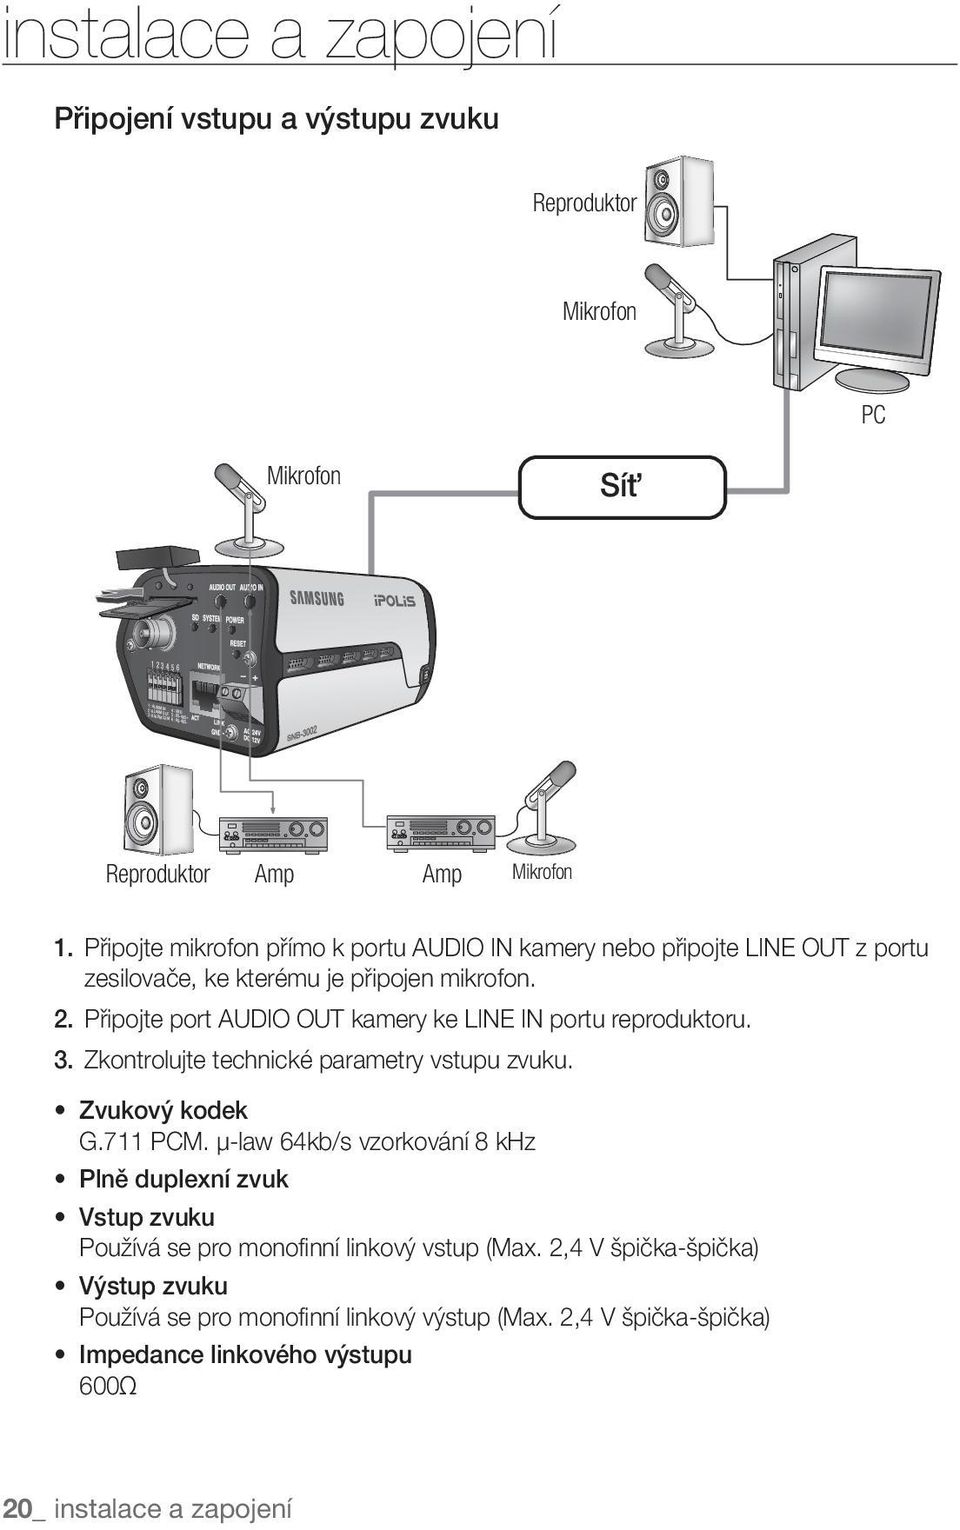 Připojte port AUDIO OUT kamery ke LINE IN portu reproduktoru. 3. Zkontrolujte technické parametry vstupu zvuku. Zvukový kodek G.711 PCM.